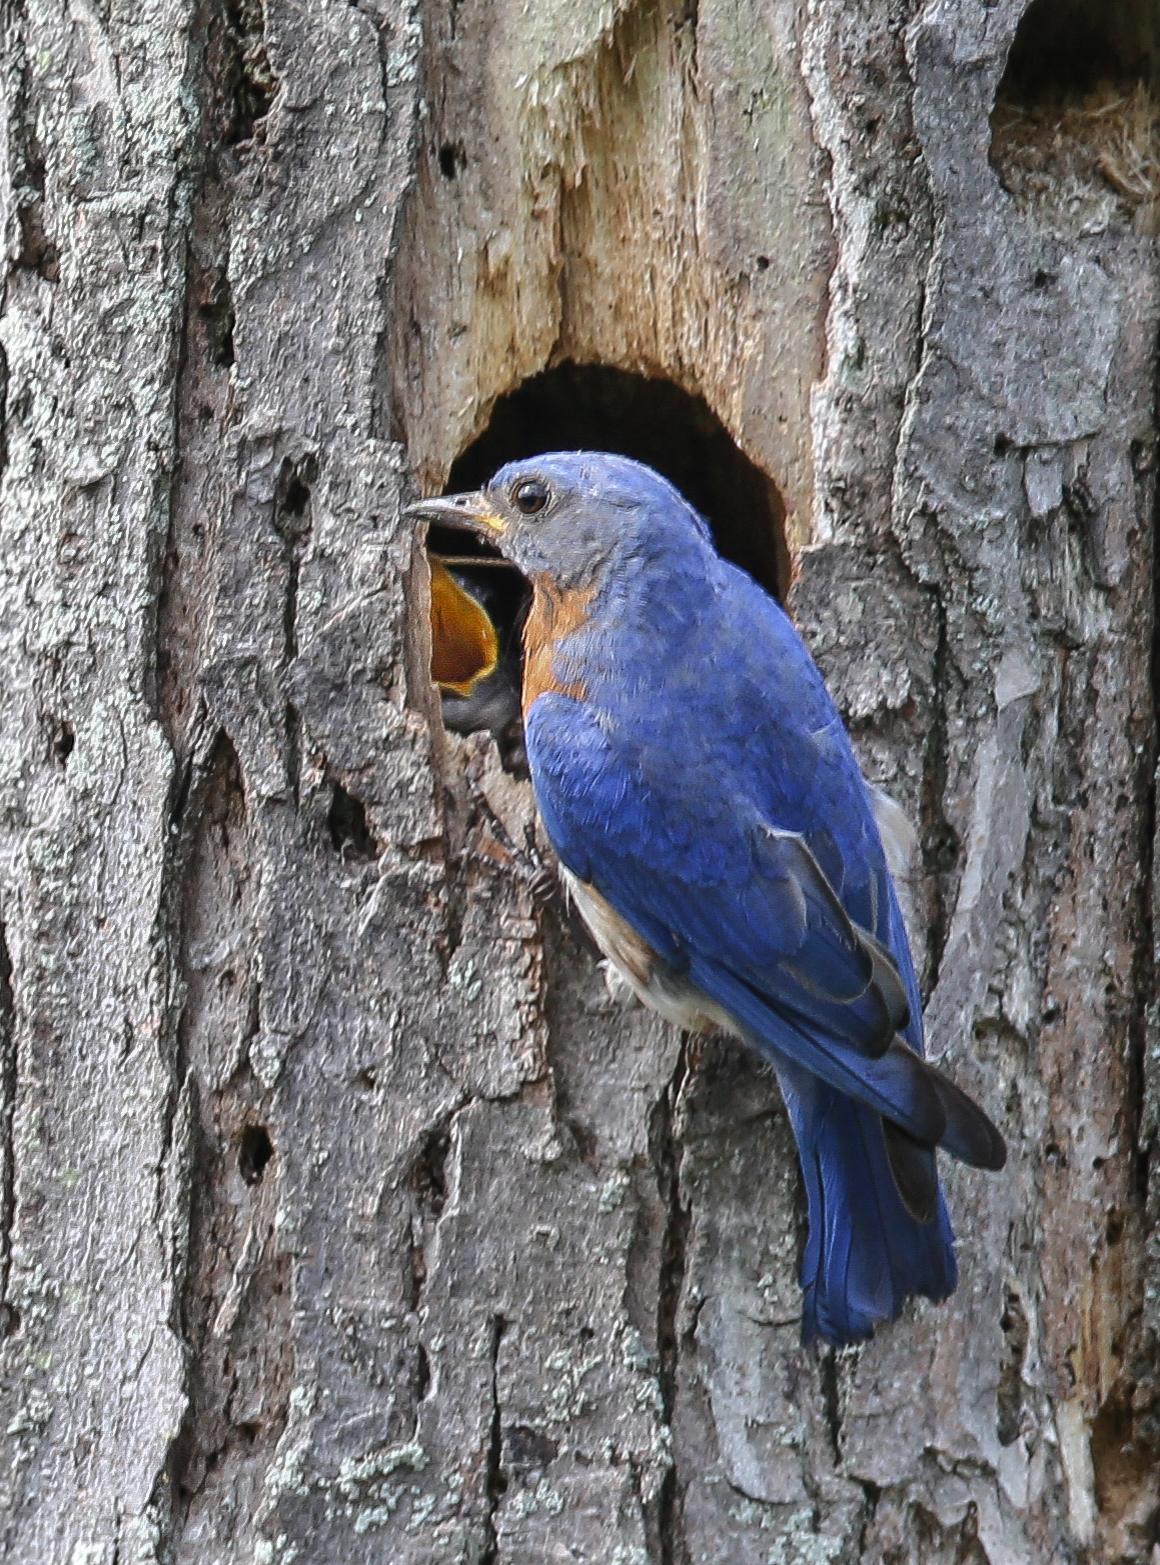 junior-ranger-jr-explores-bluebirds-u-s-national-park-service